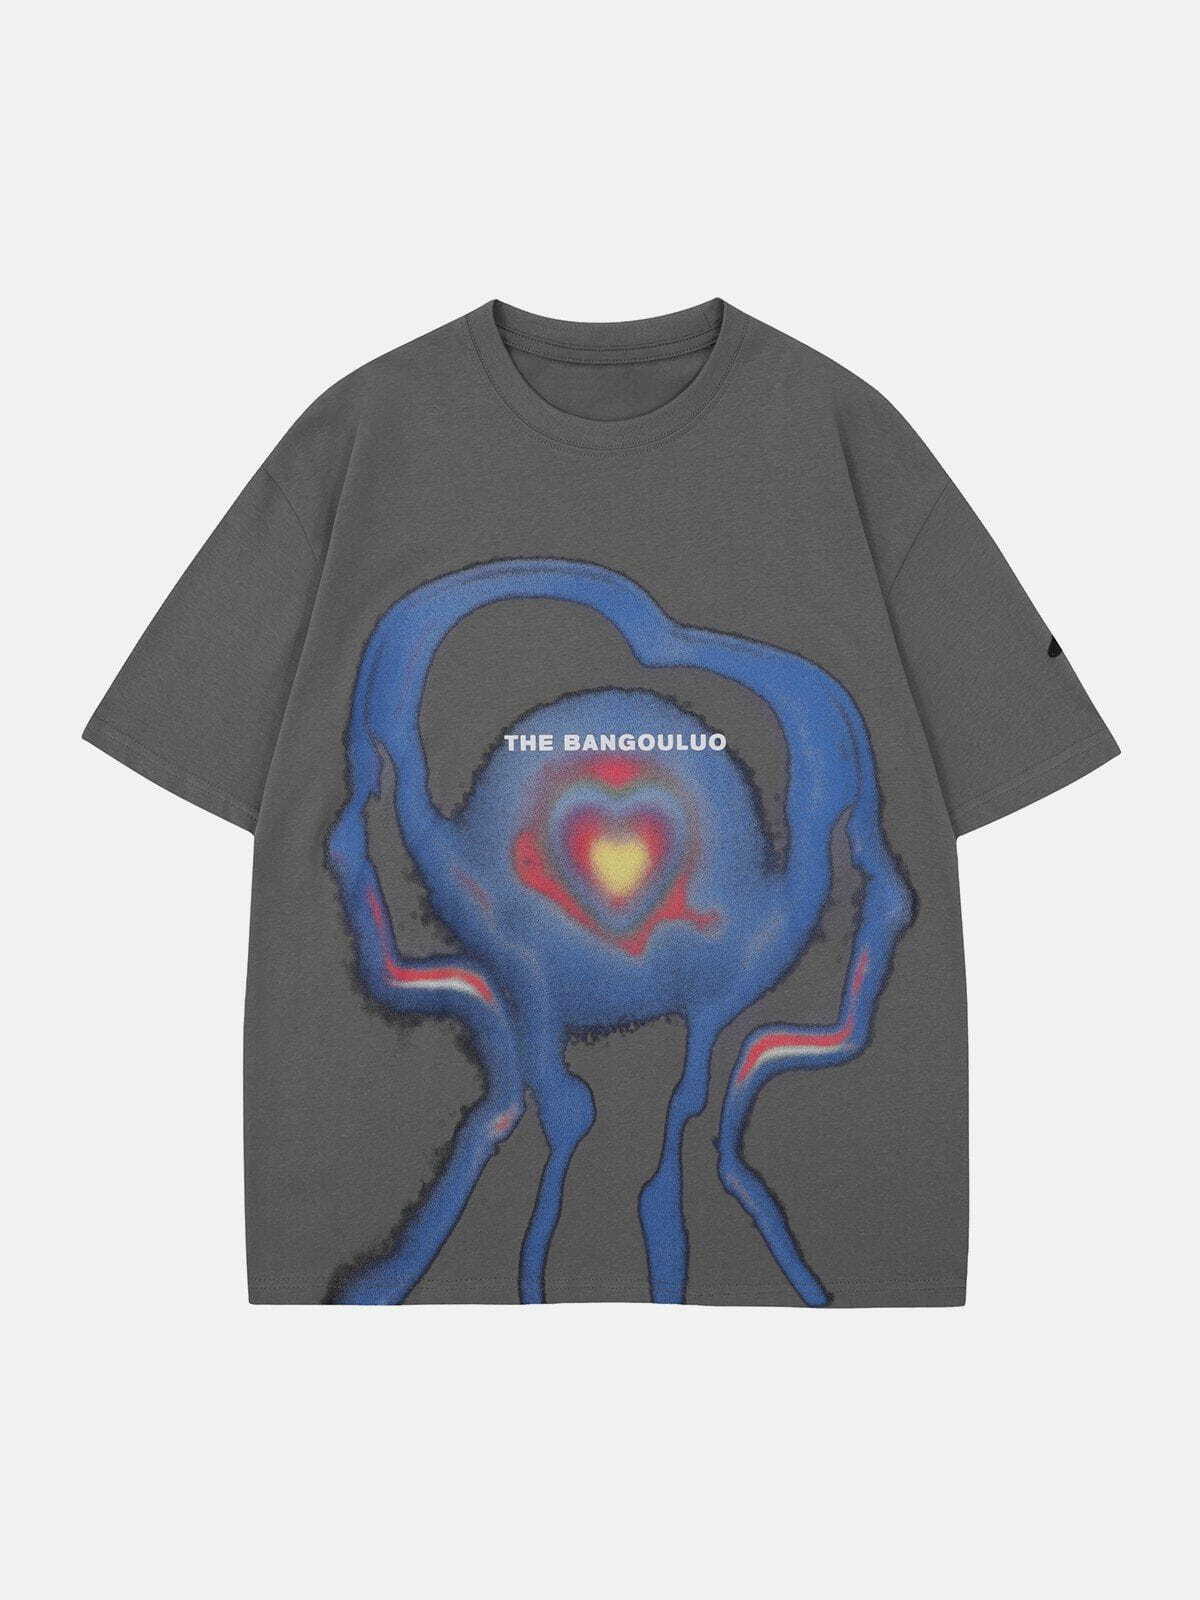 abstract heart graphic tshirt retro chic statement tee 8948